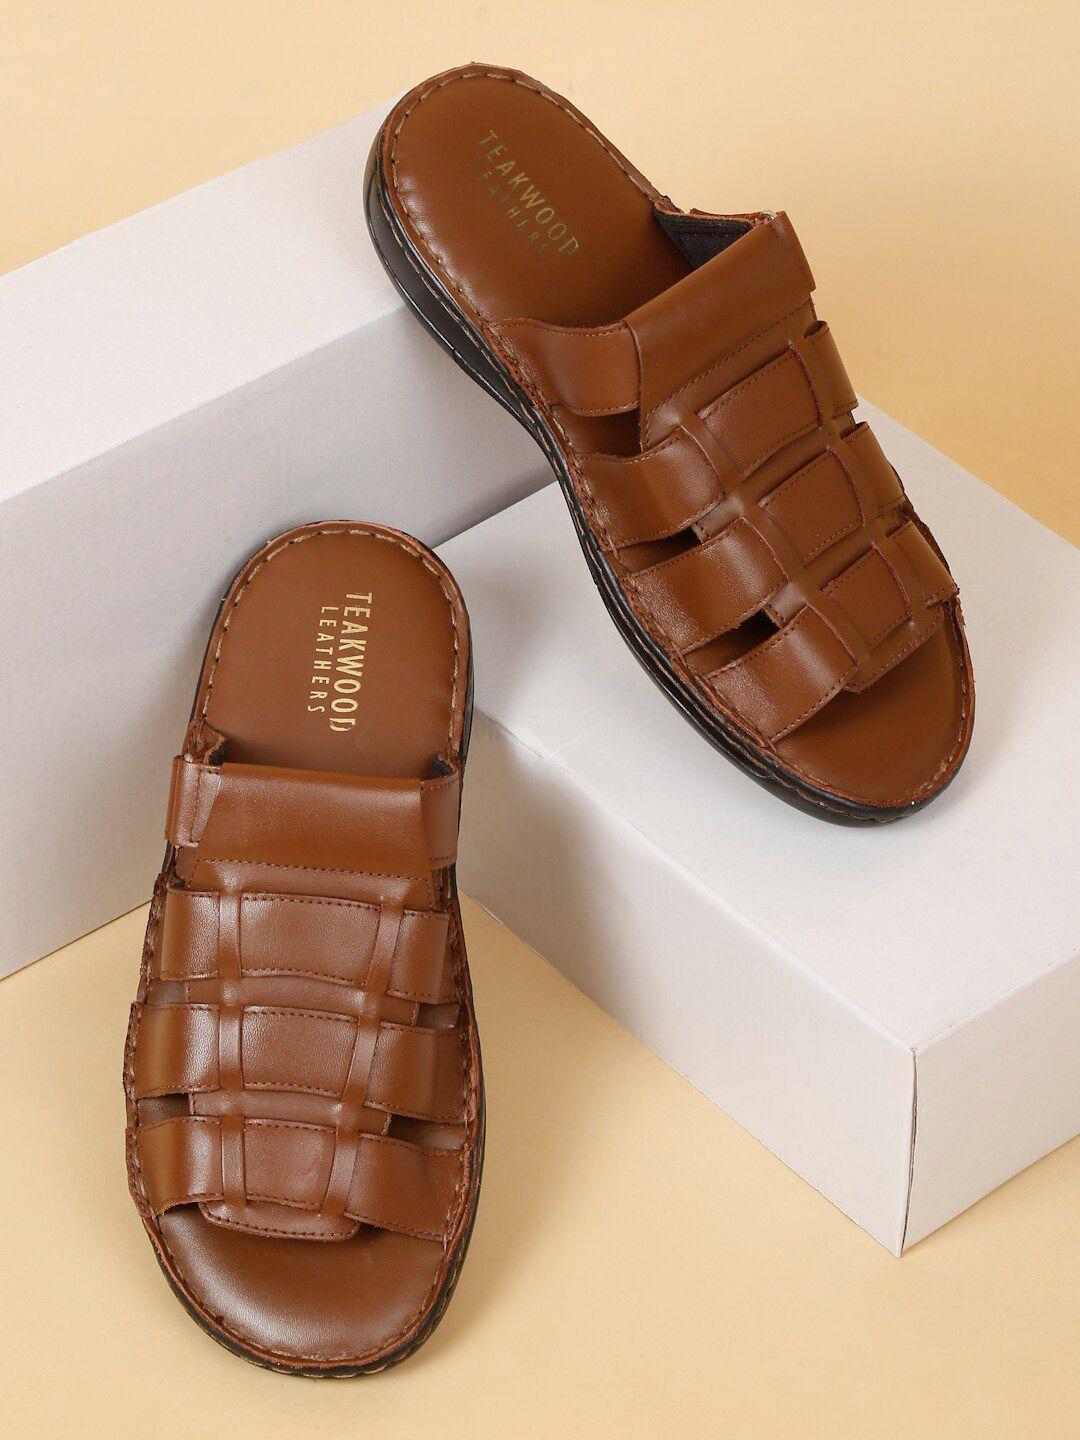 teakwood-leathers-men-open-toe-leather-comfort-sandals